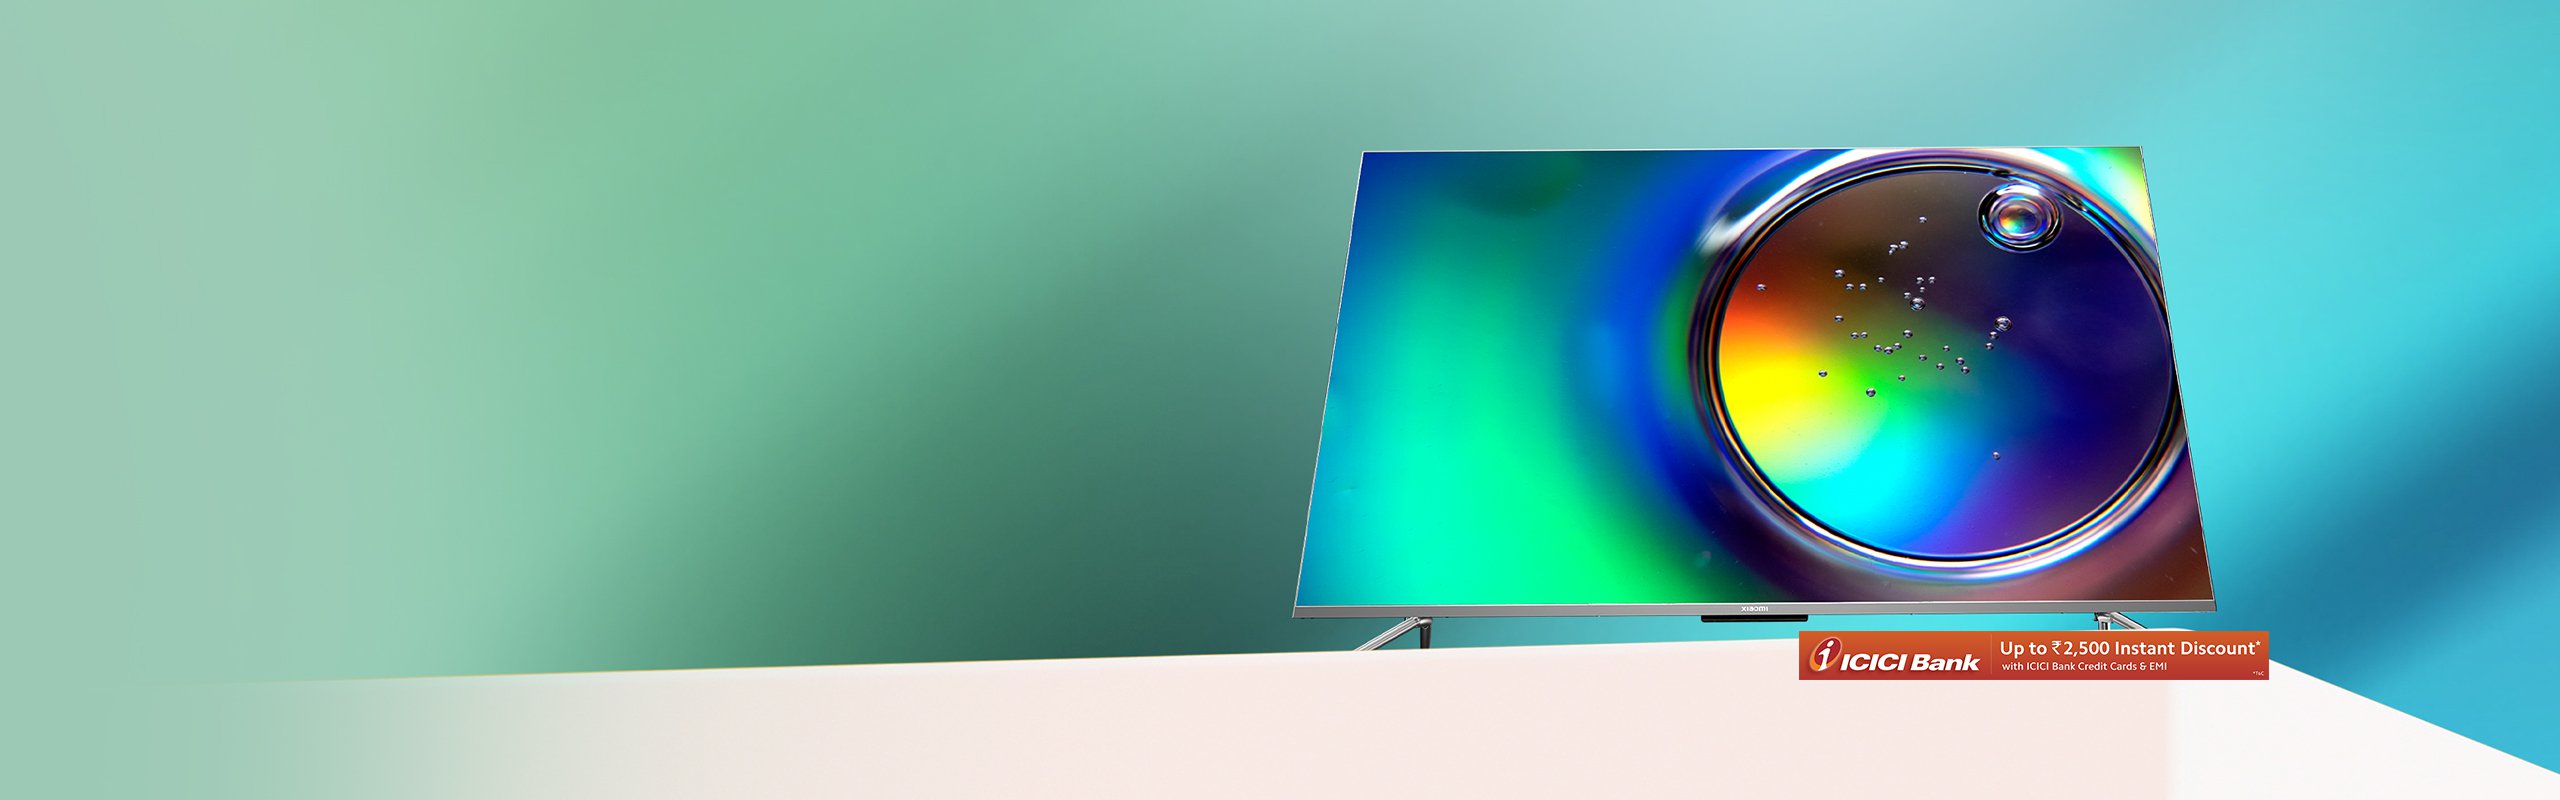 Xiaomi Smart TV X Pro Series Designed by Xiaomi